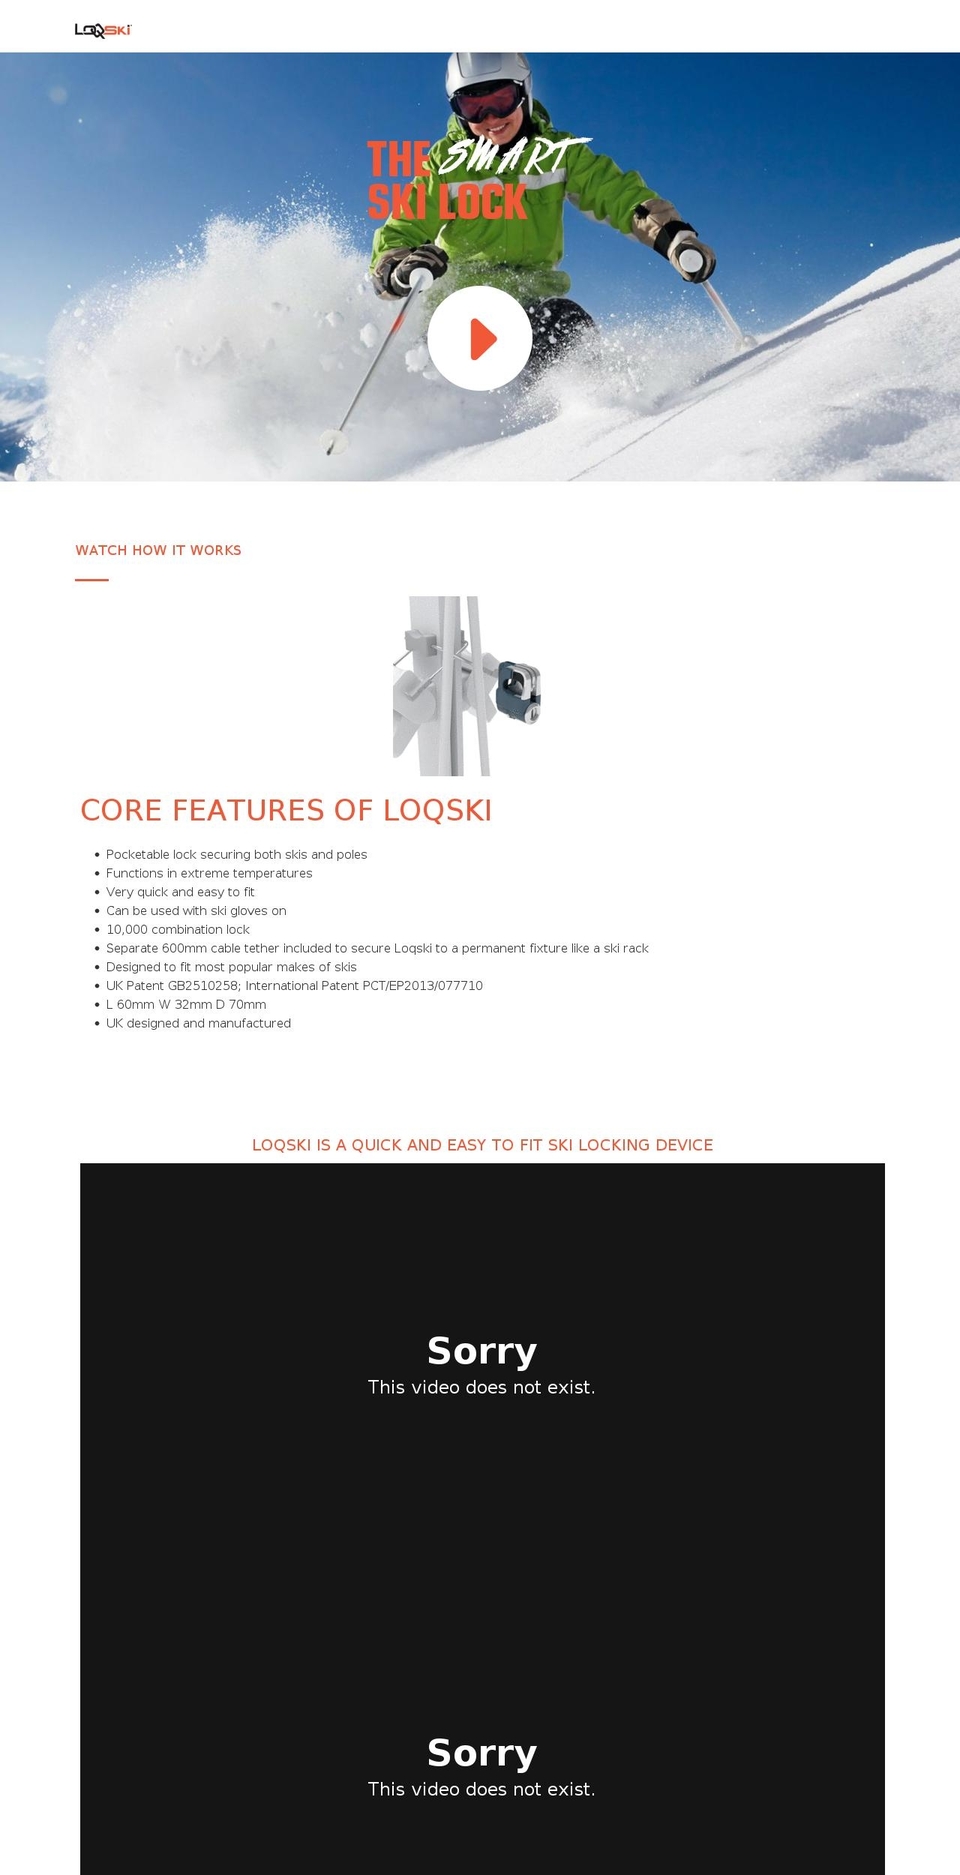 loqski.cn shopify website screenshot